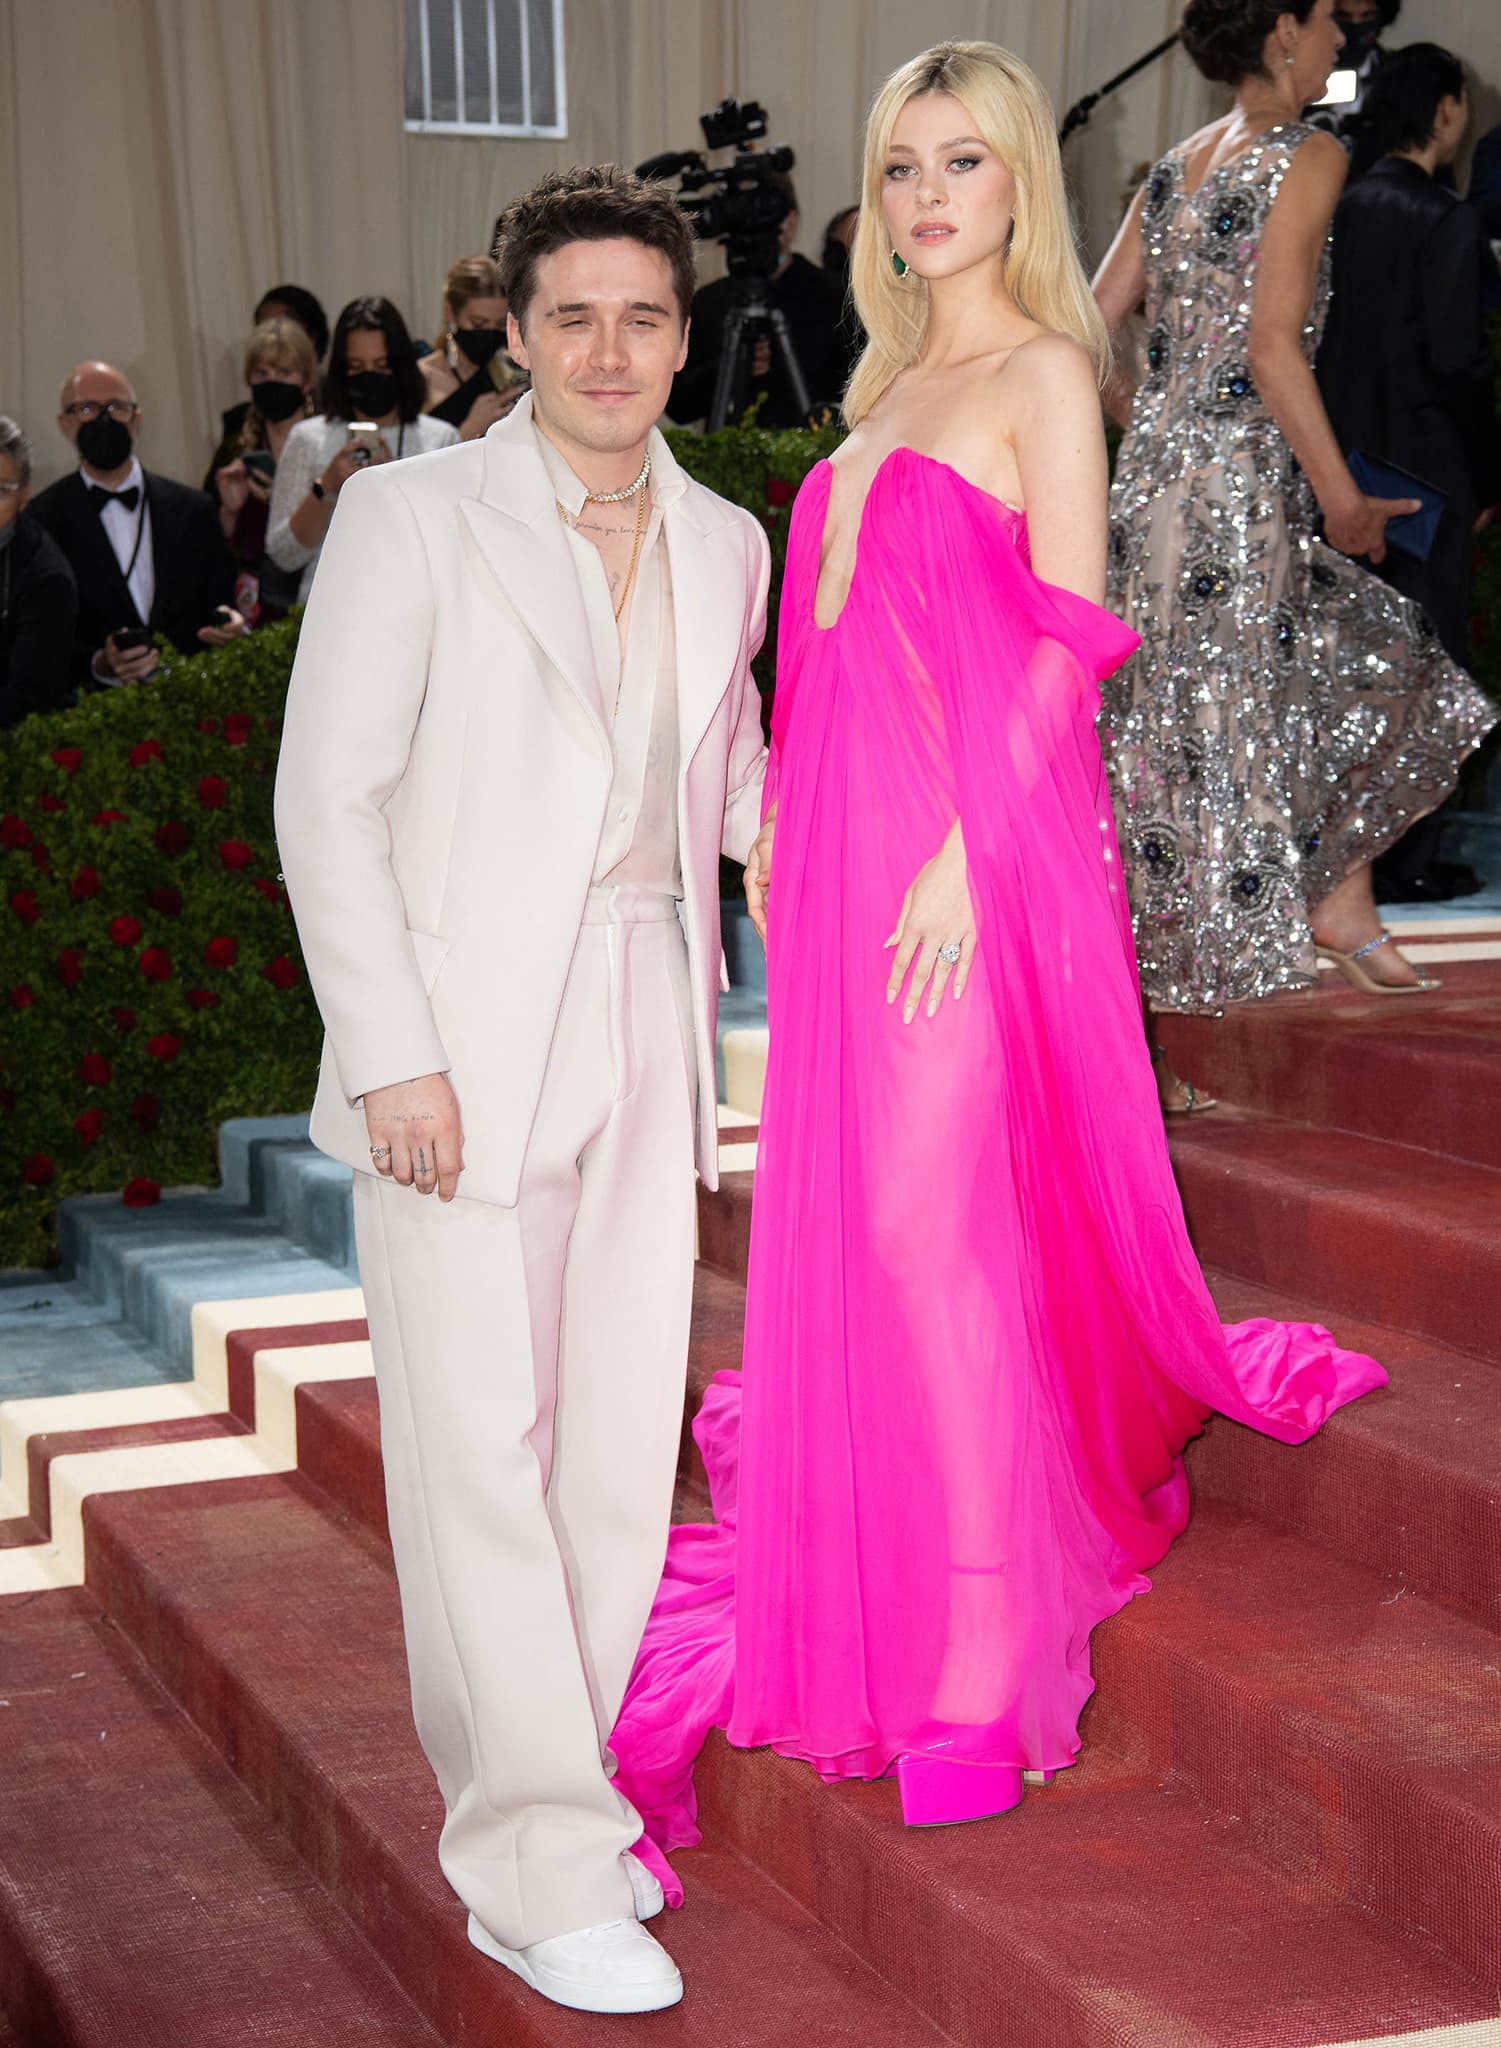 Nicola Peltz Beckham Tickled Pink With Post-Wedding Glow at MET Gala